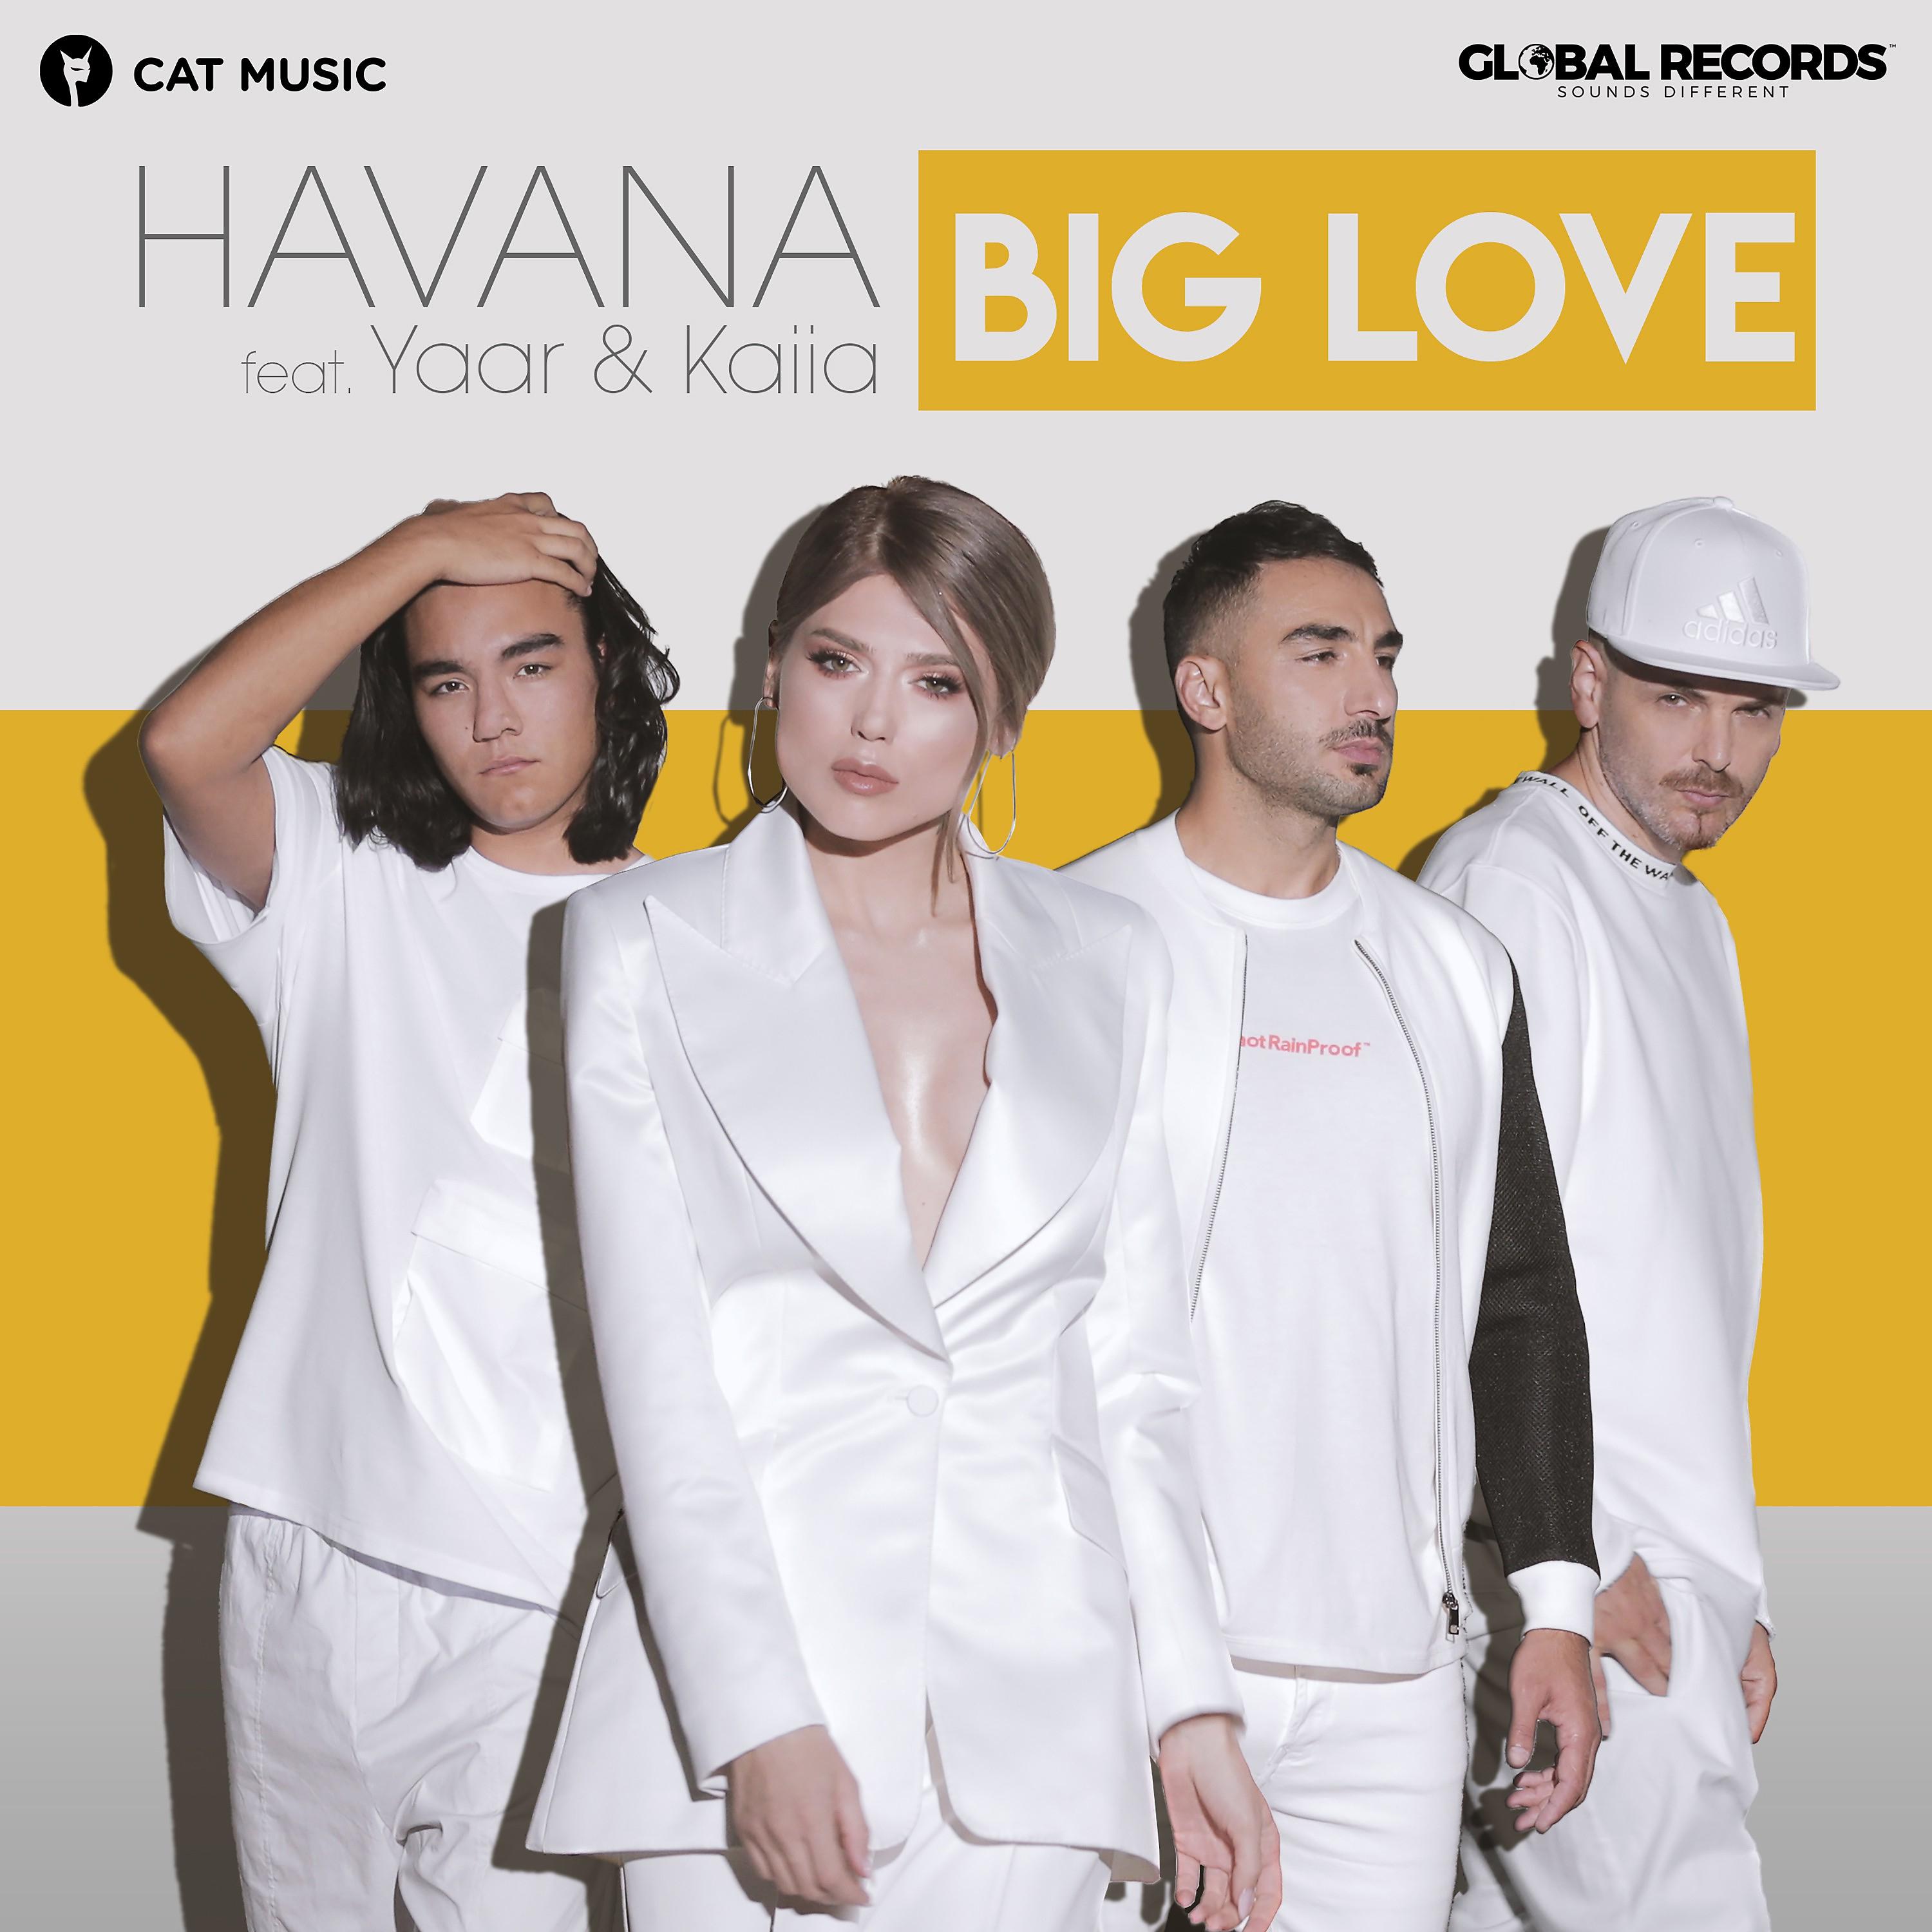 Big love com. Havana группа. Хавана певец. Yaar группа. Havana feat. Yaar Kaiia.